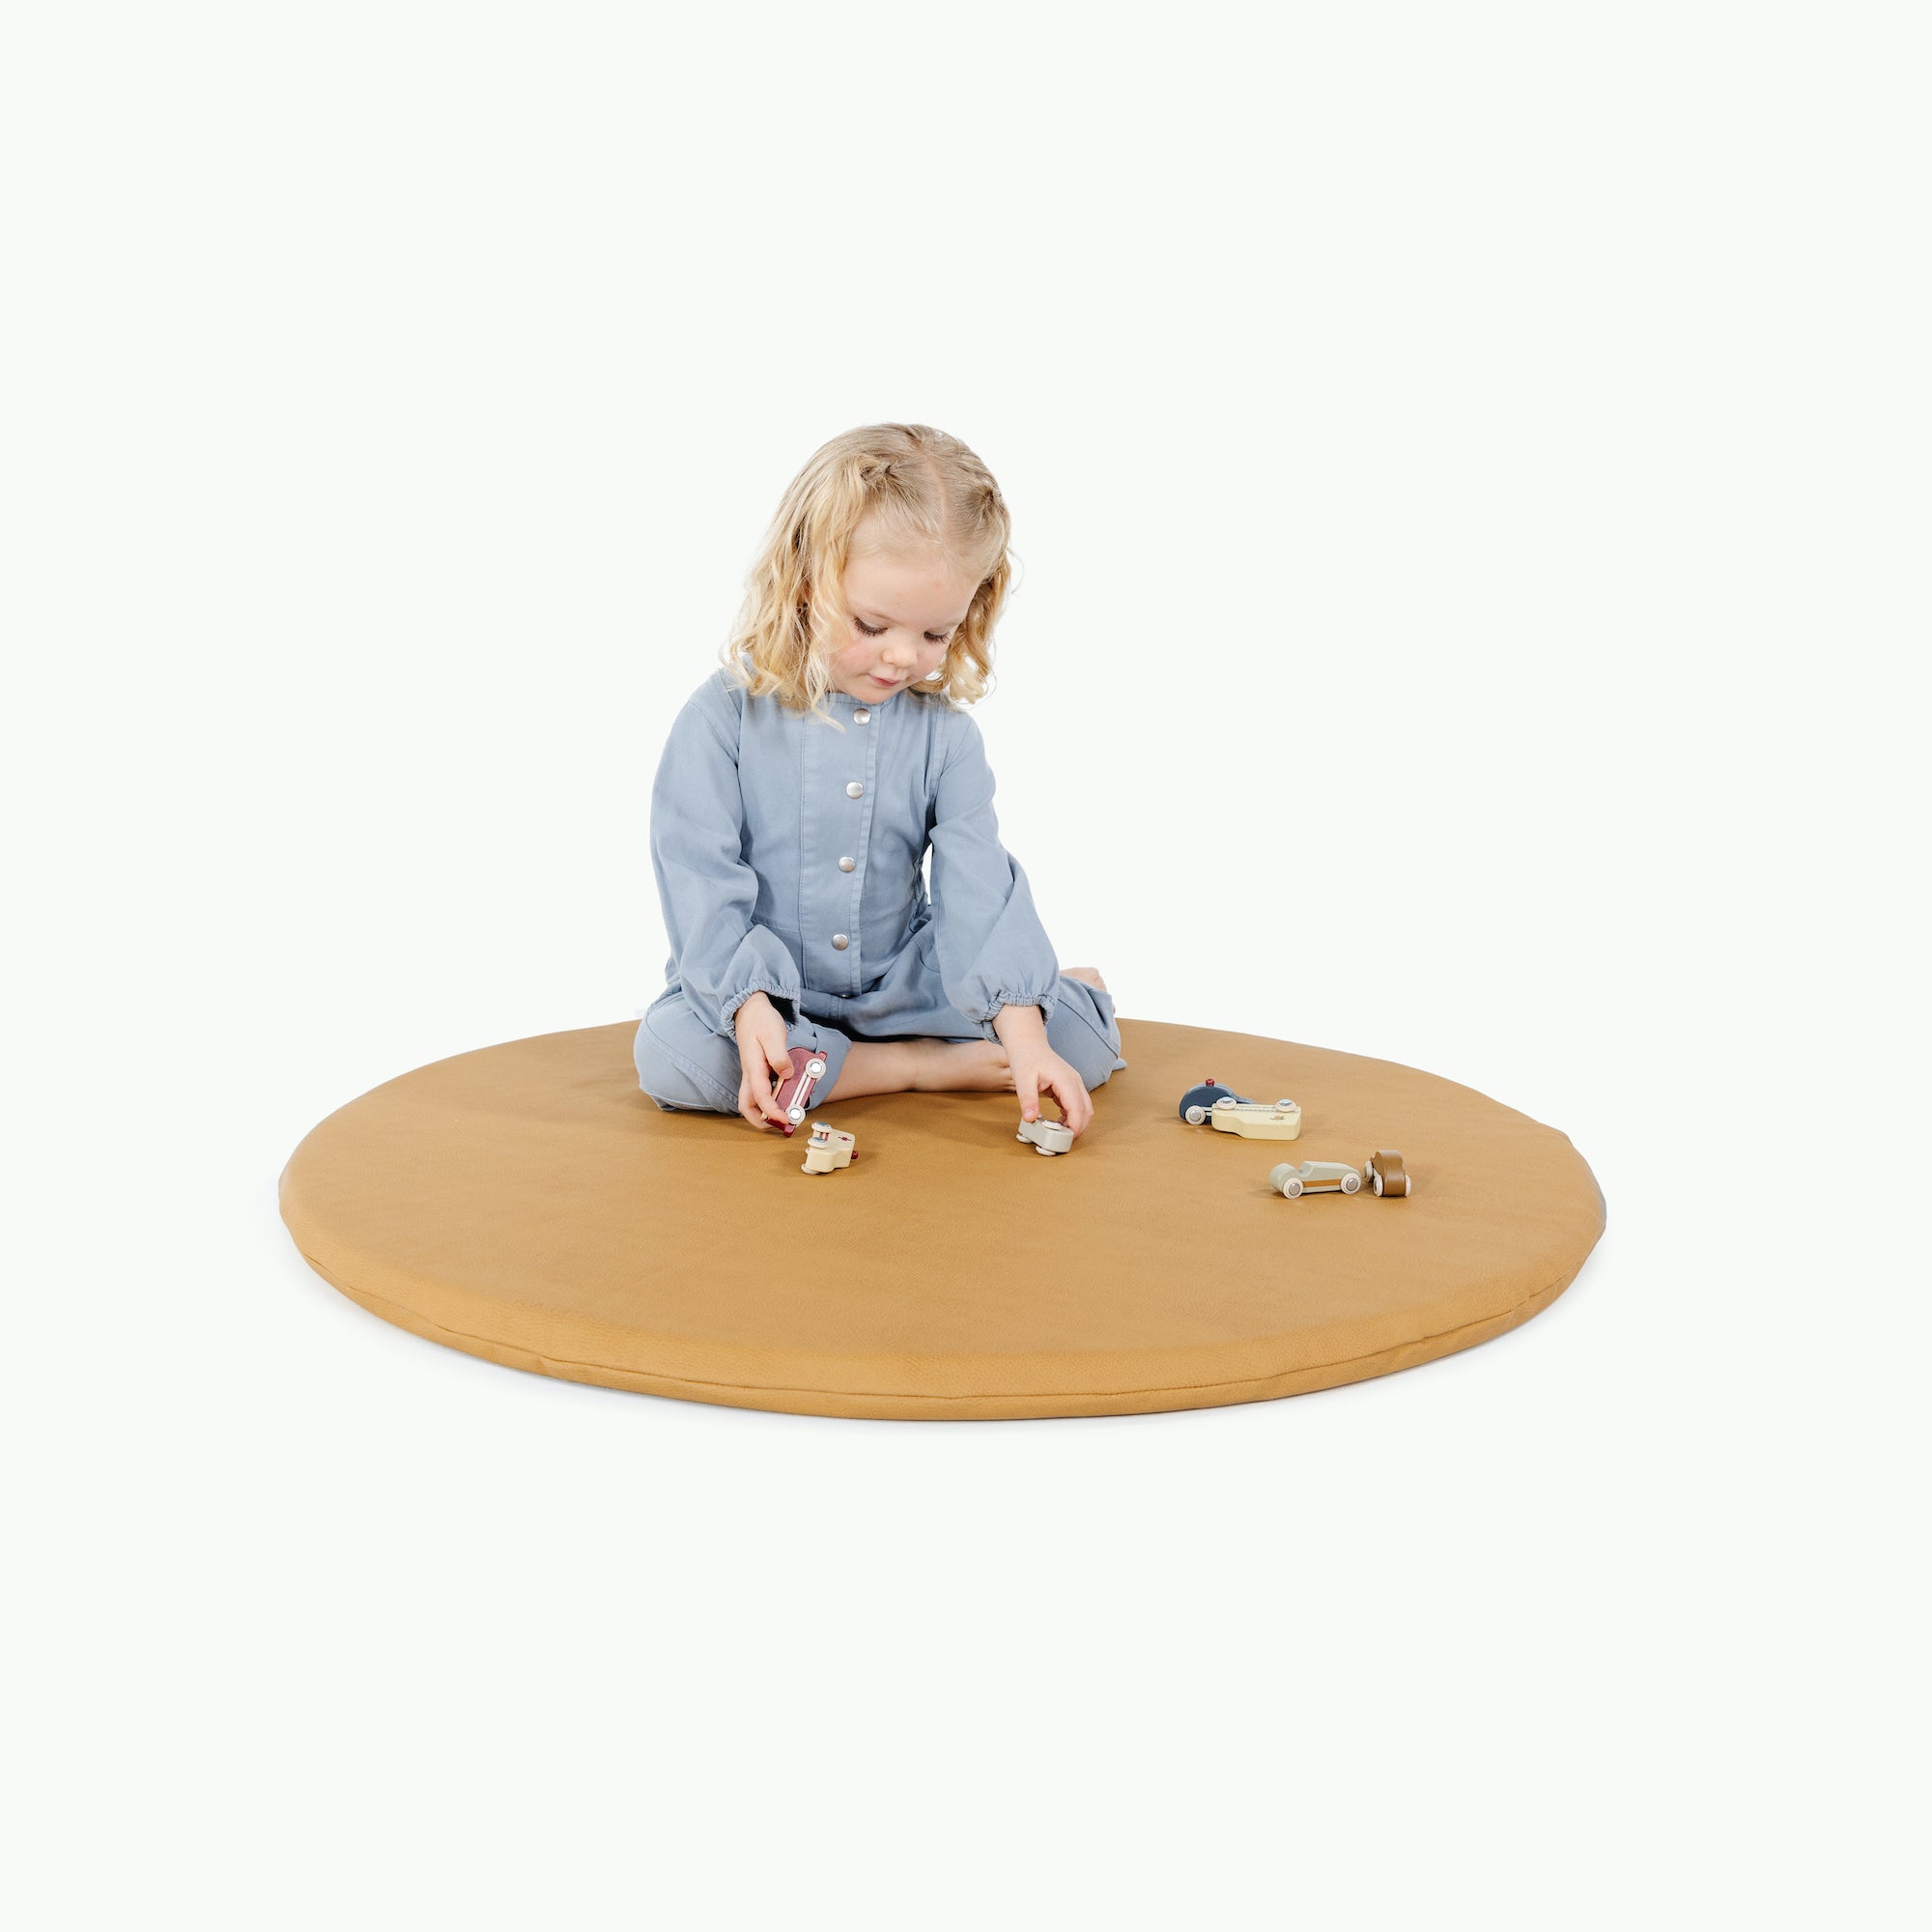 Tassel / Circle@little girl playing on padded mat